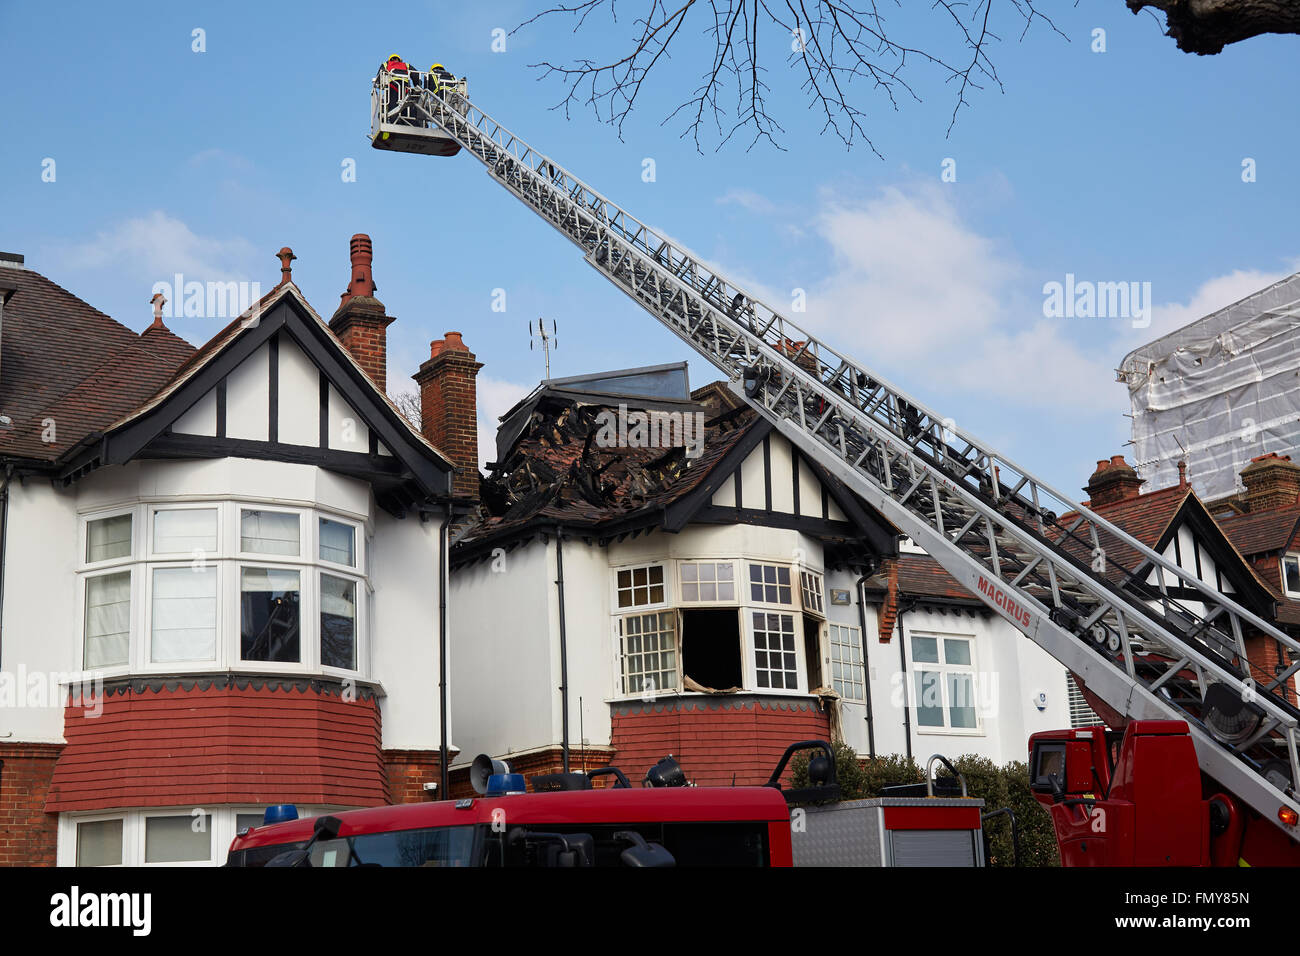 Belsize Park, Londres, Reino Unido, 13 de marzo, 2016. Incendio en tres pisos casa pareada en Antrim Grove Crédito: Fantástico conejo/Alamy Live News Foto de stock